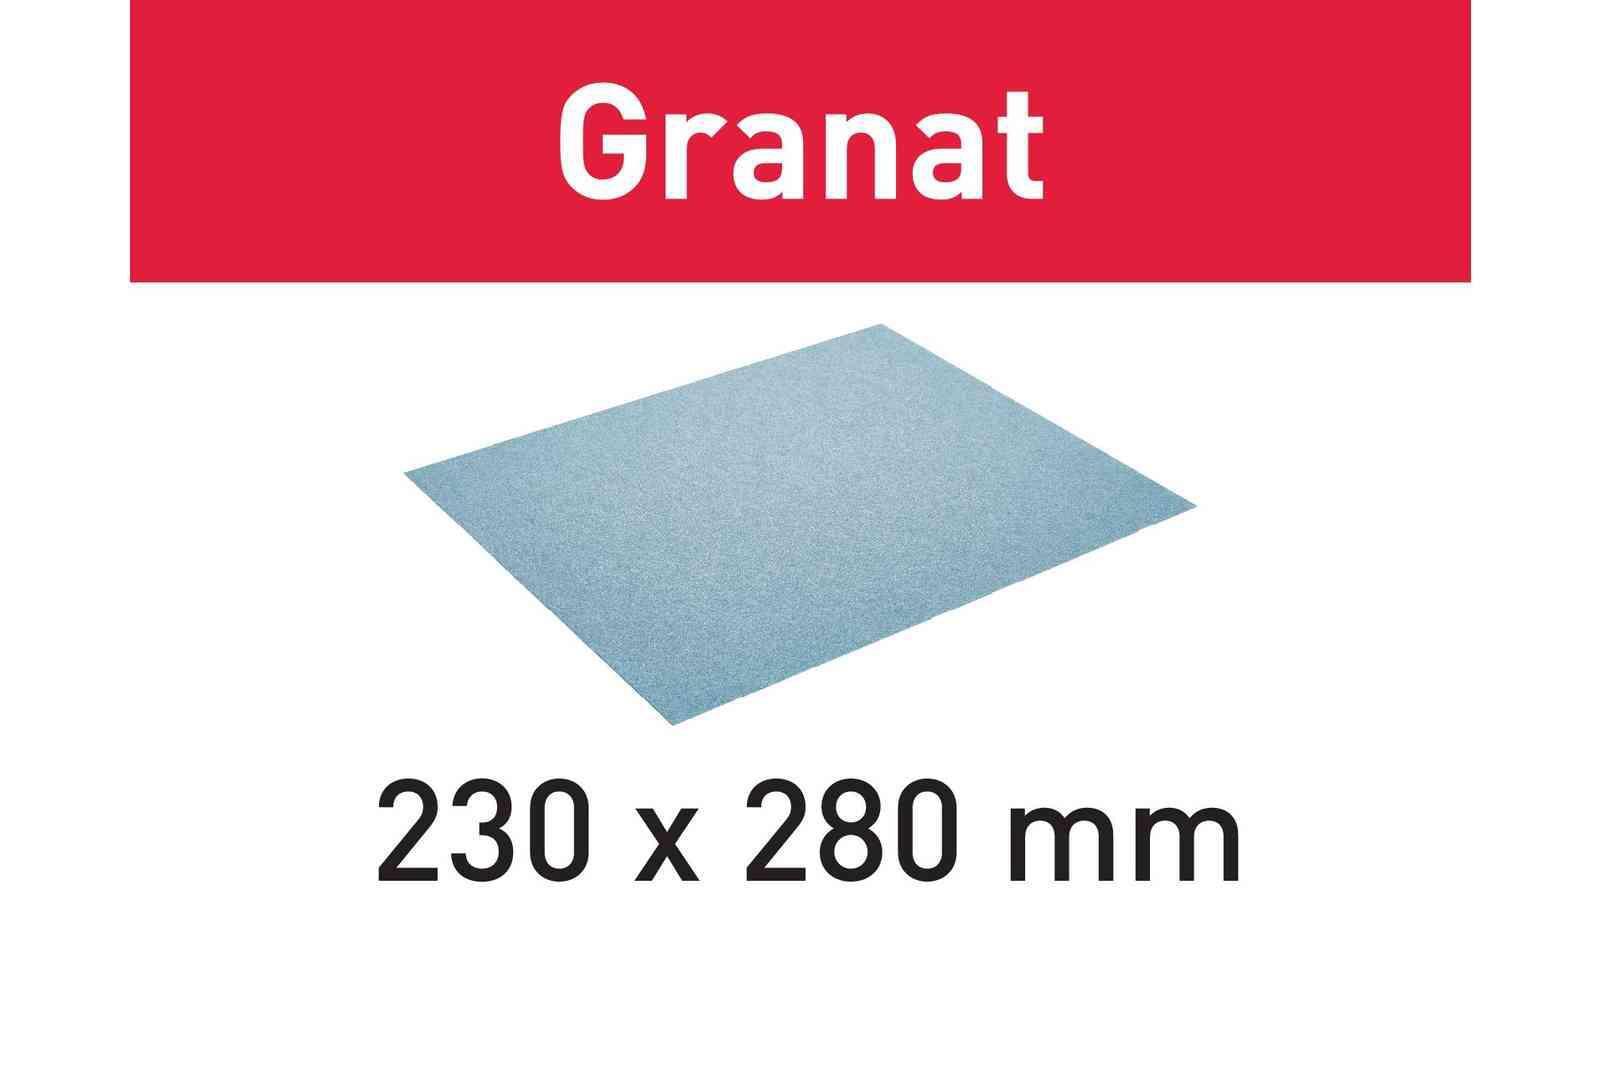 Festool Schuurpapier 230x280 P40 GR/10 Granat